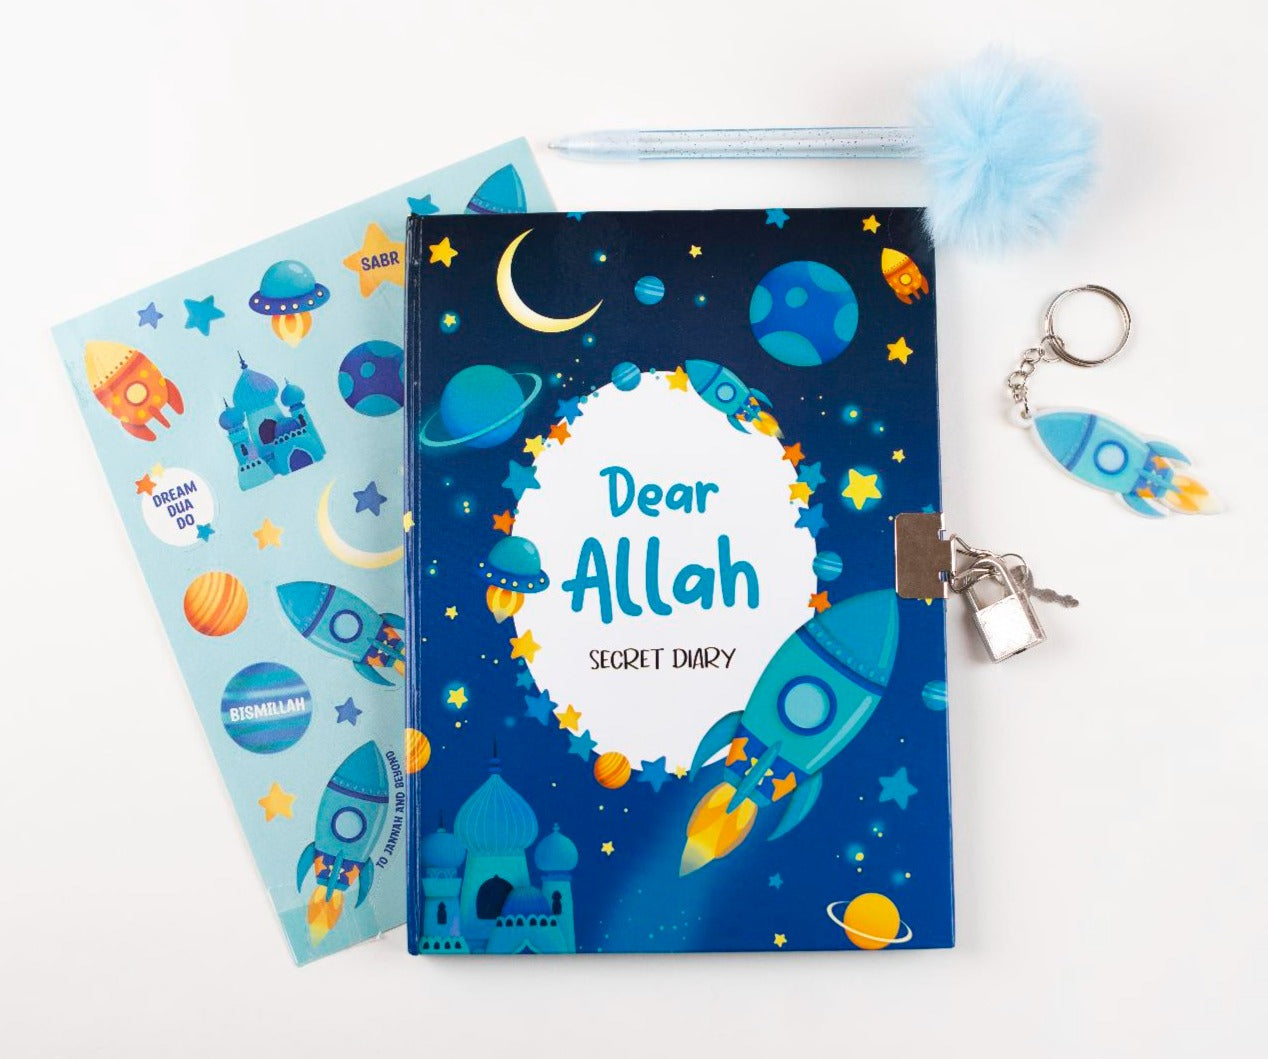 Dear Allah Secret Diary - Blue